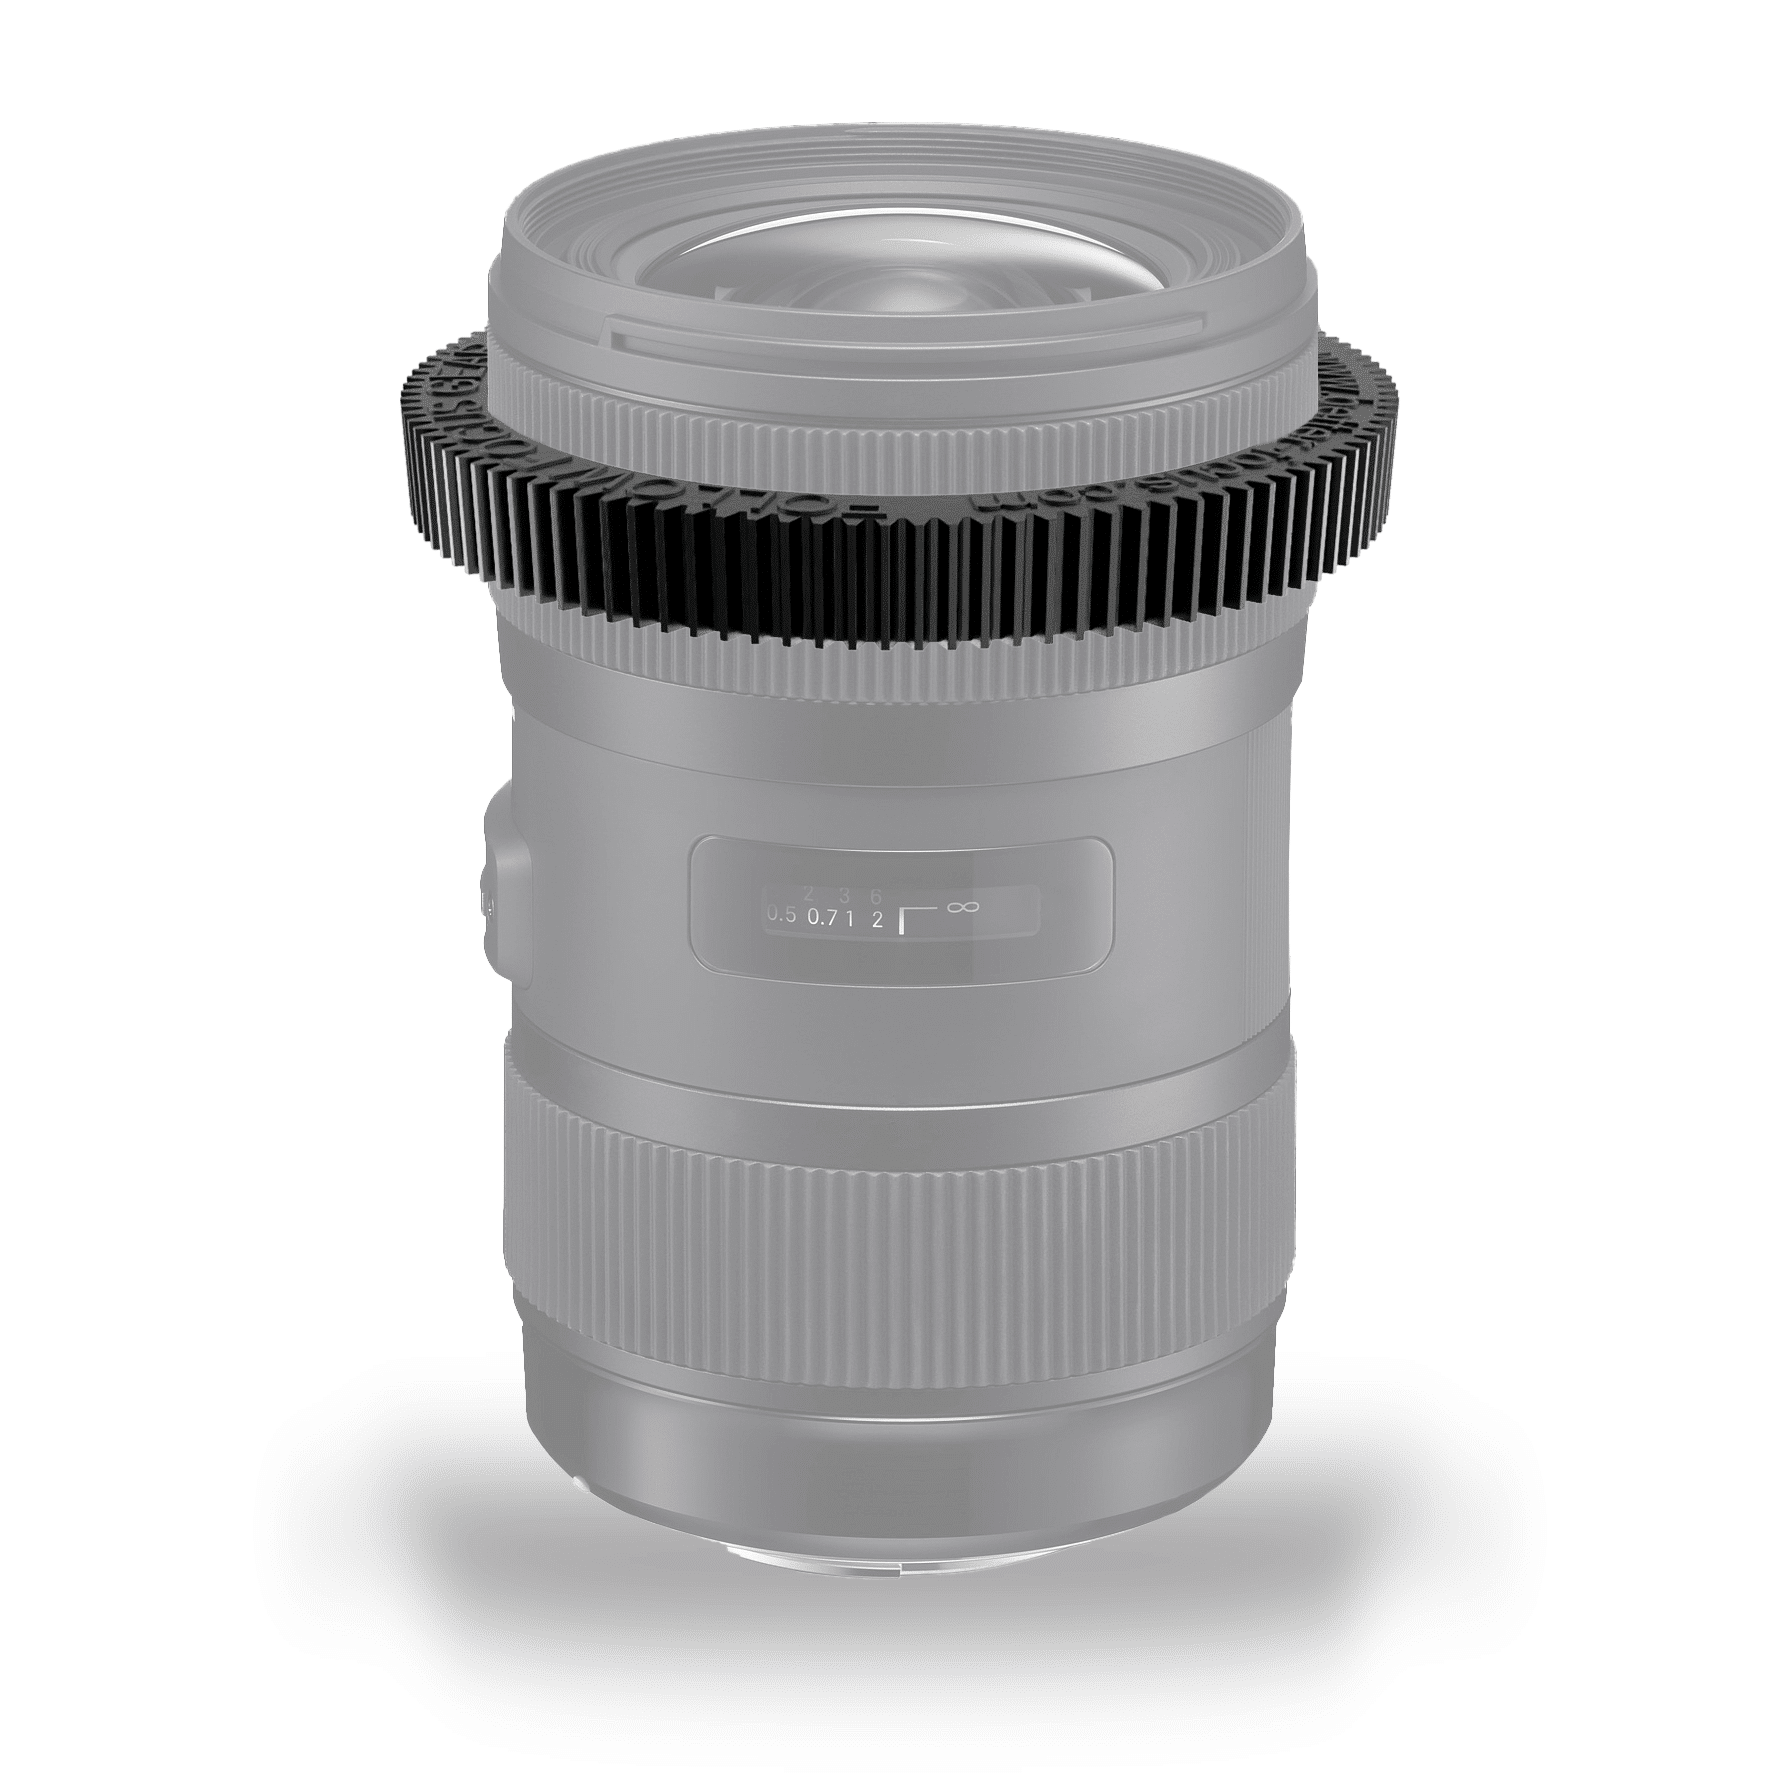 Follow Focus Ring for Tamron 17-35mm f2.8-4 Di OSD lens